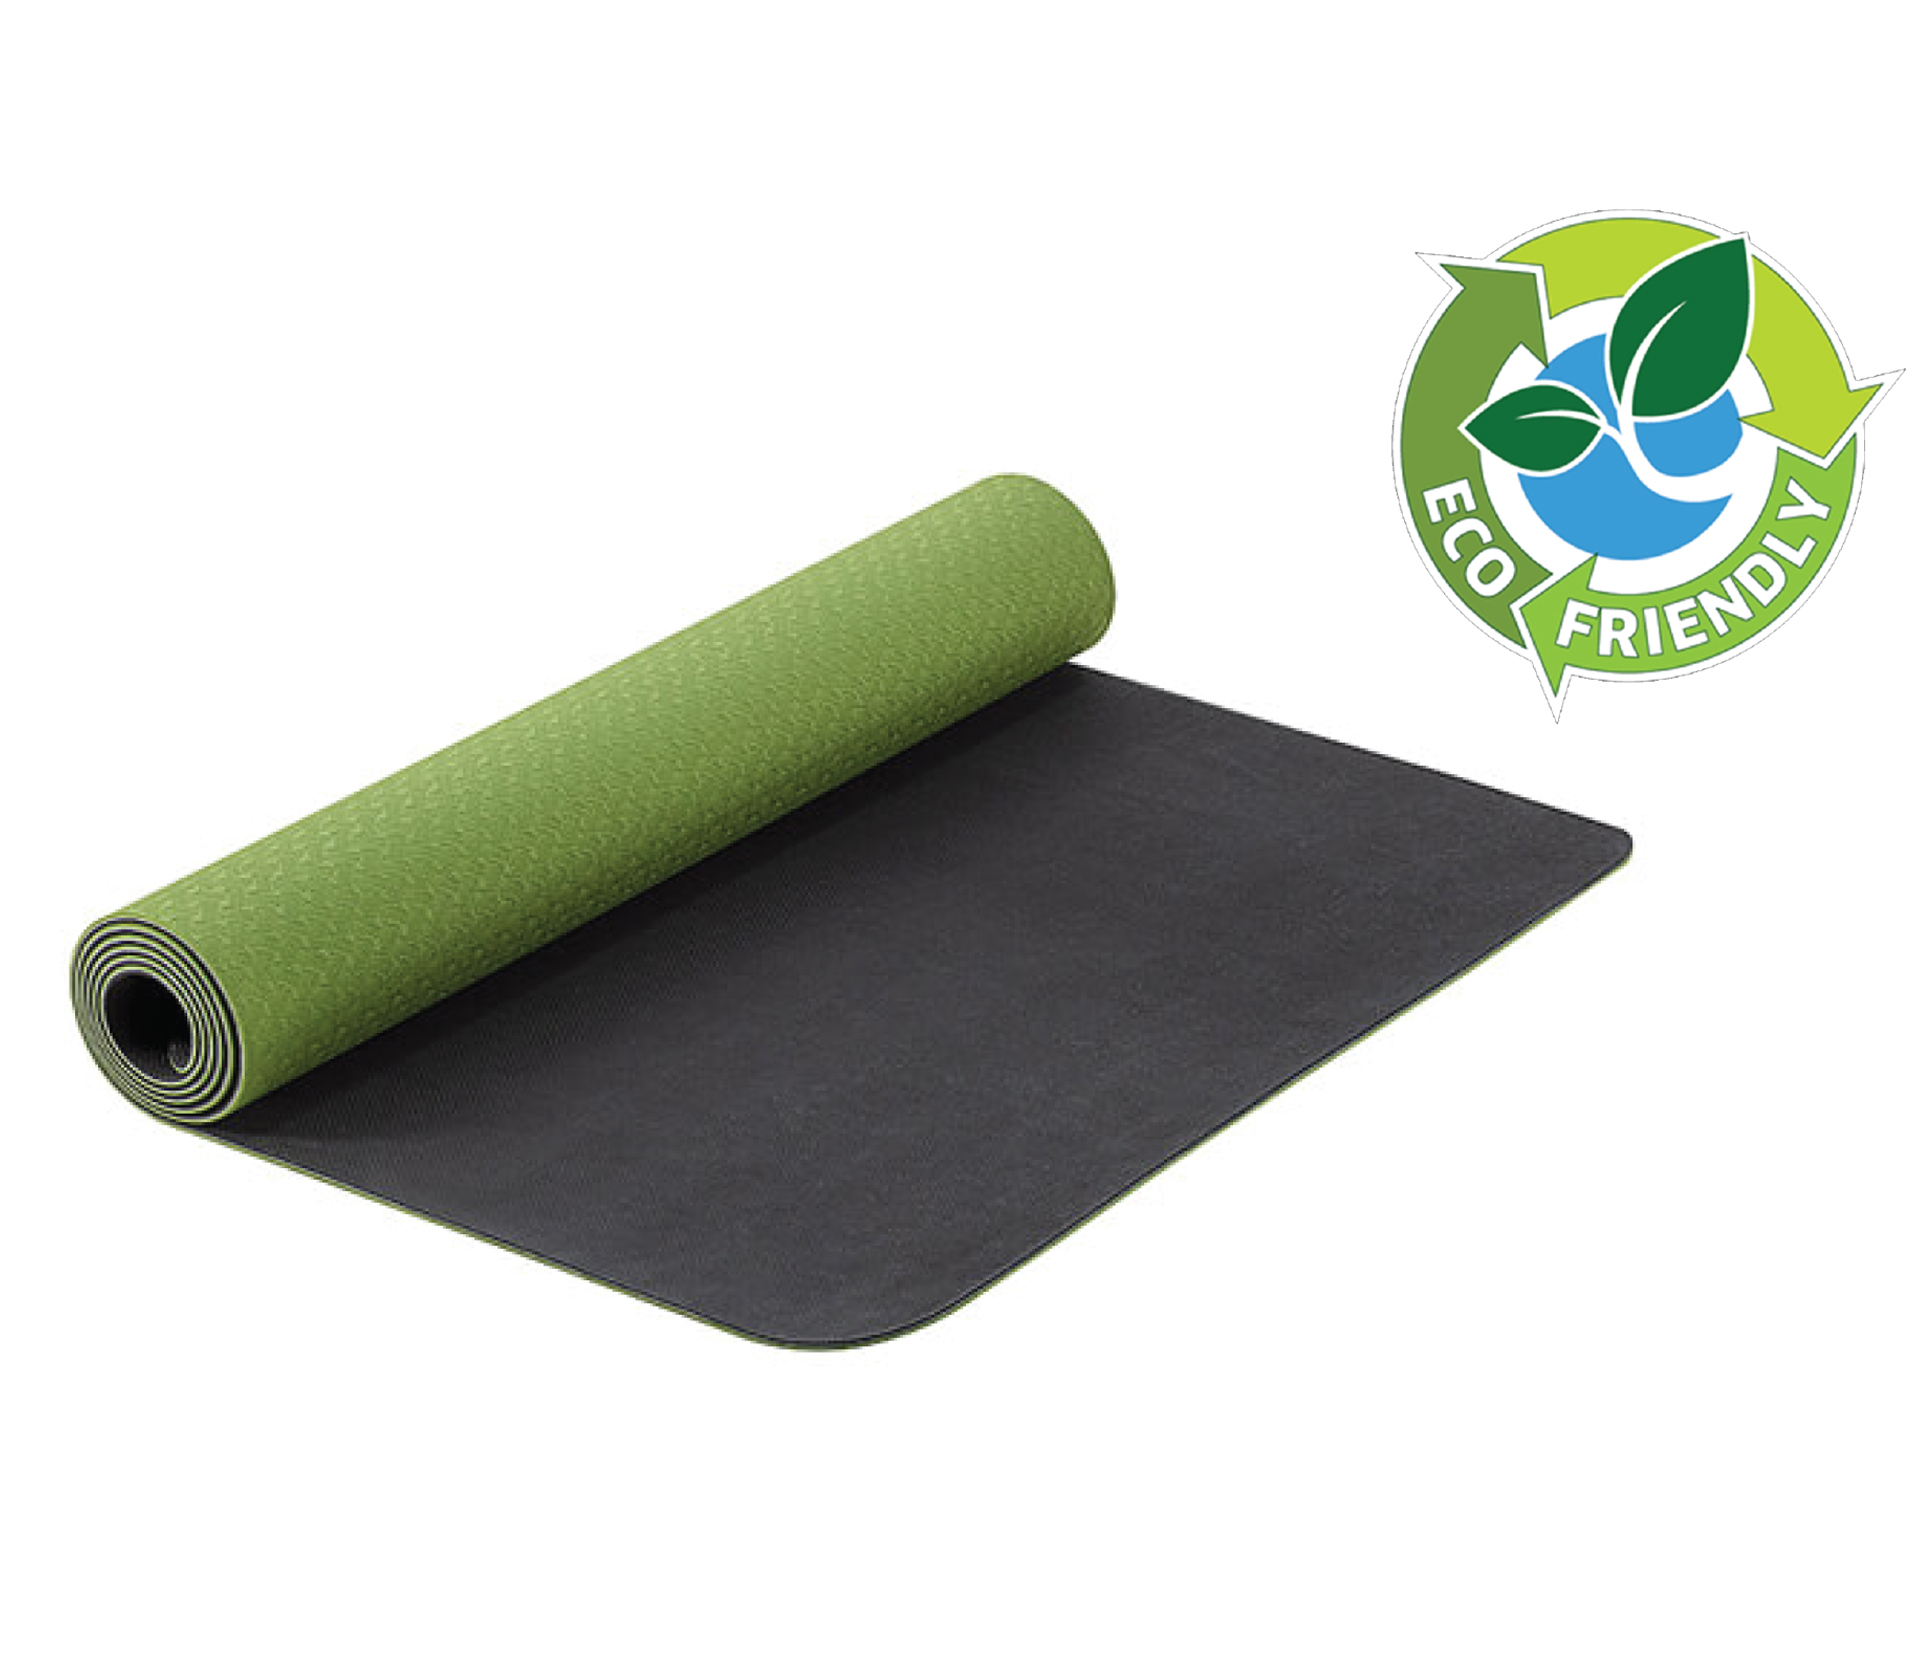 Eco-friendly Yoga Mats for Eco - Consicous Yogis for Comfortable